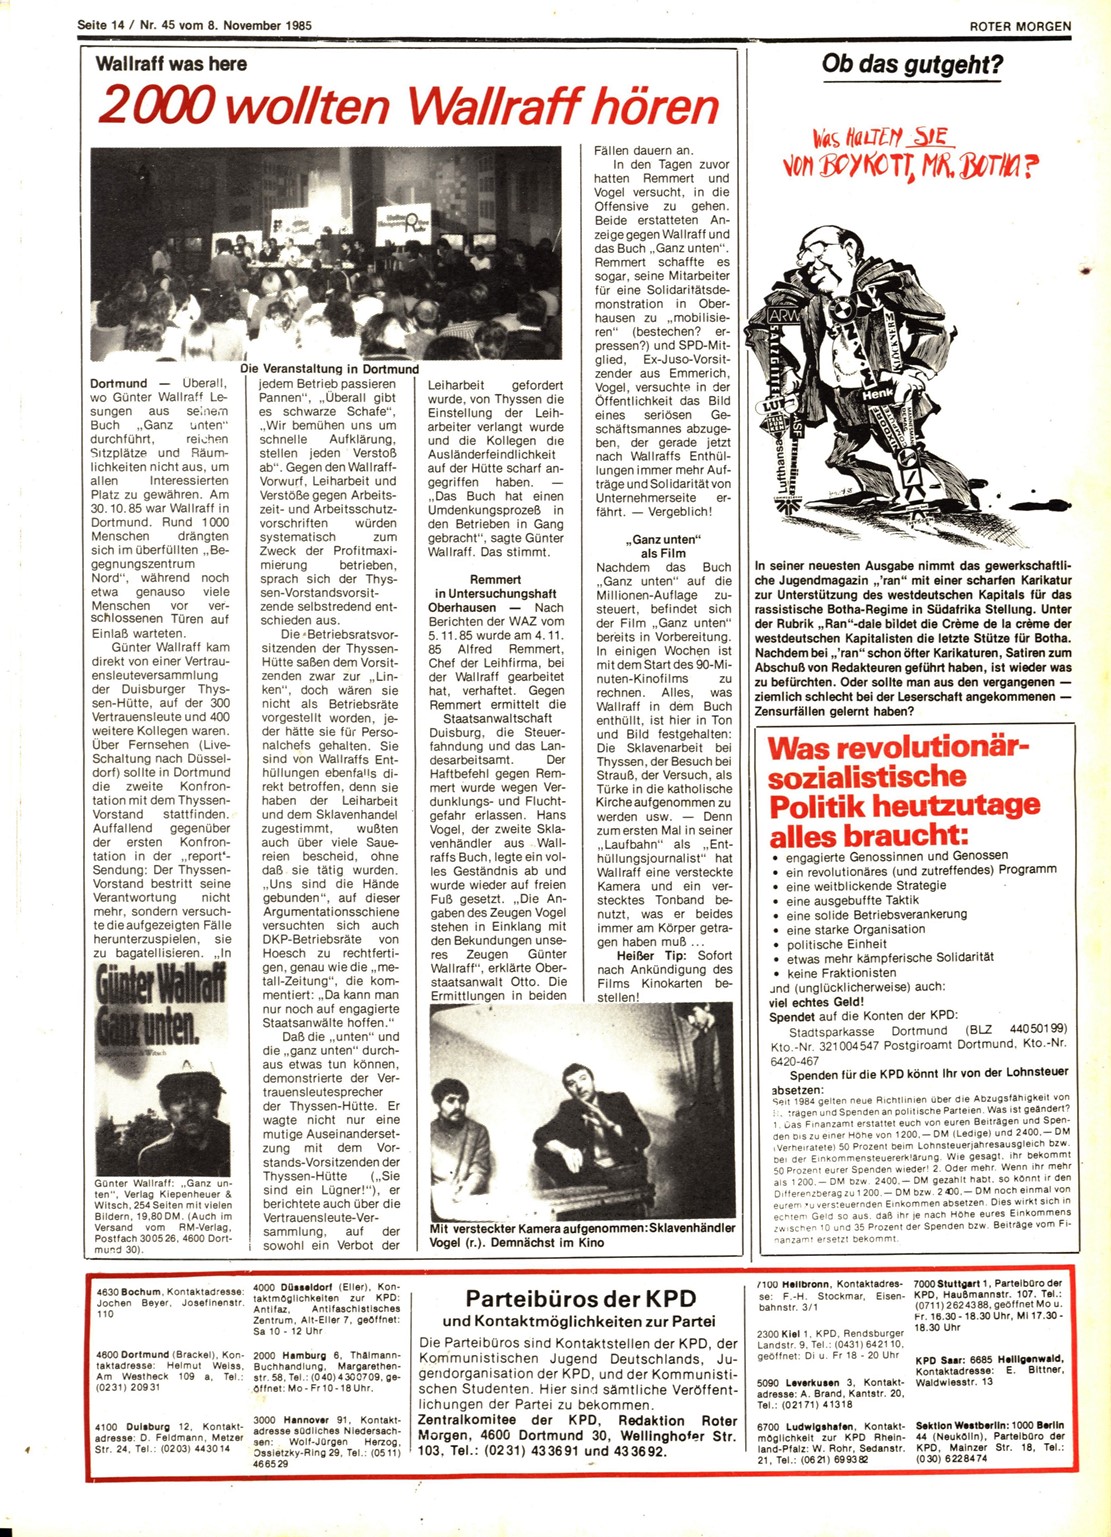 Roter Morgen, 19. Jg., 8. November 1985, Nr. 45, Seite 14